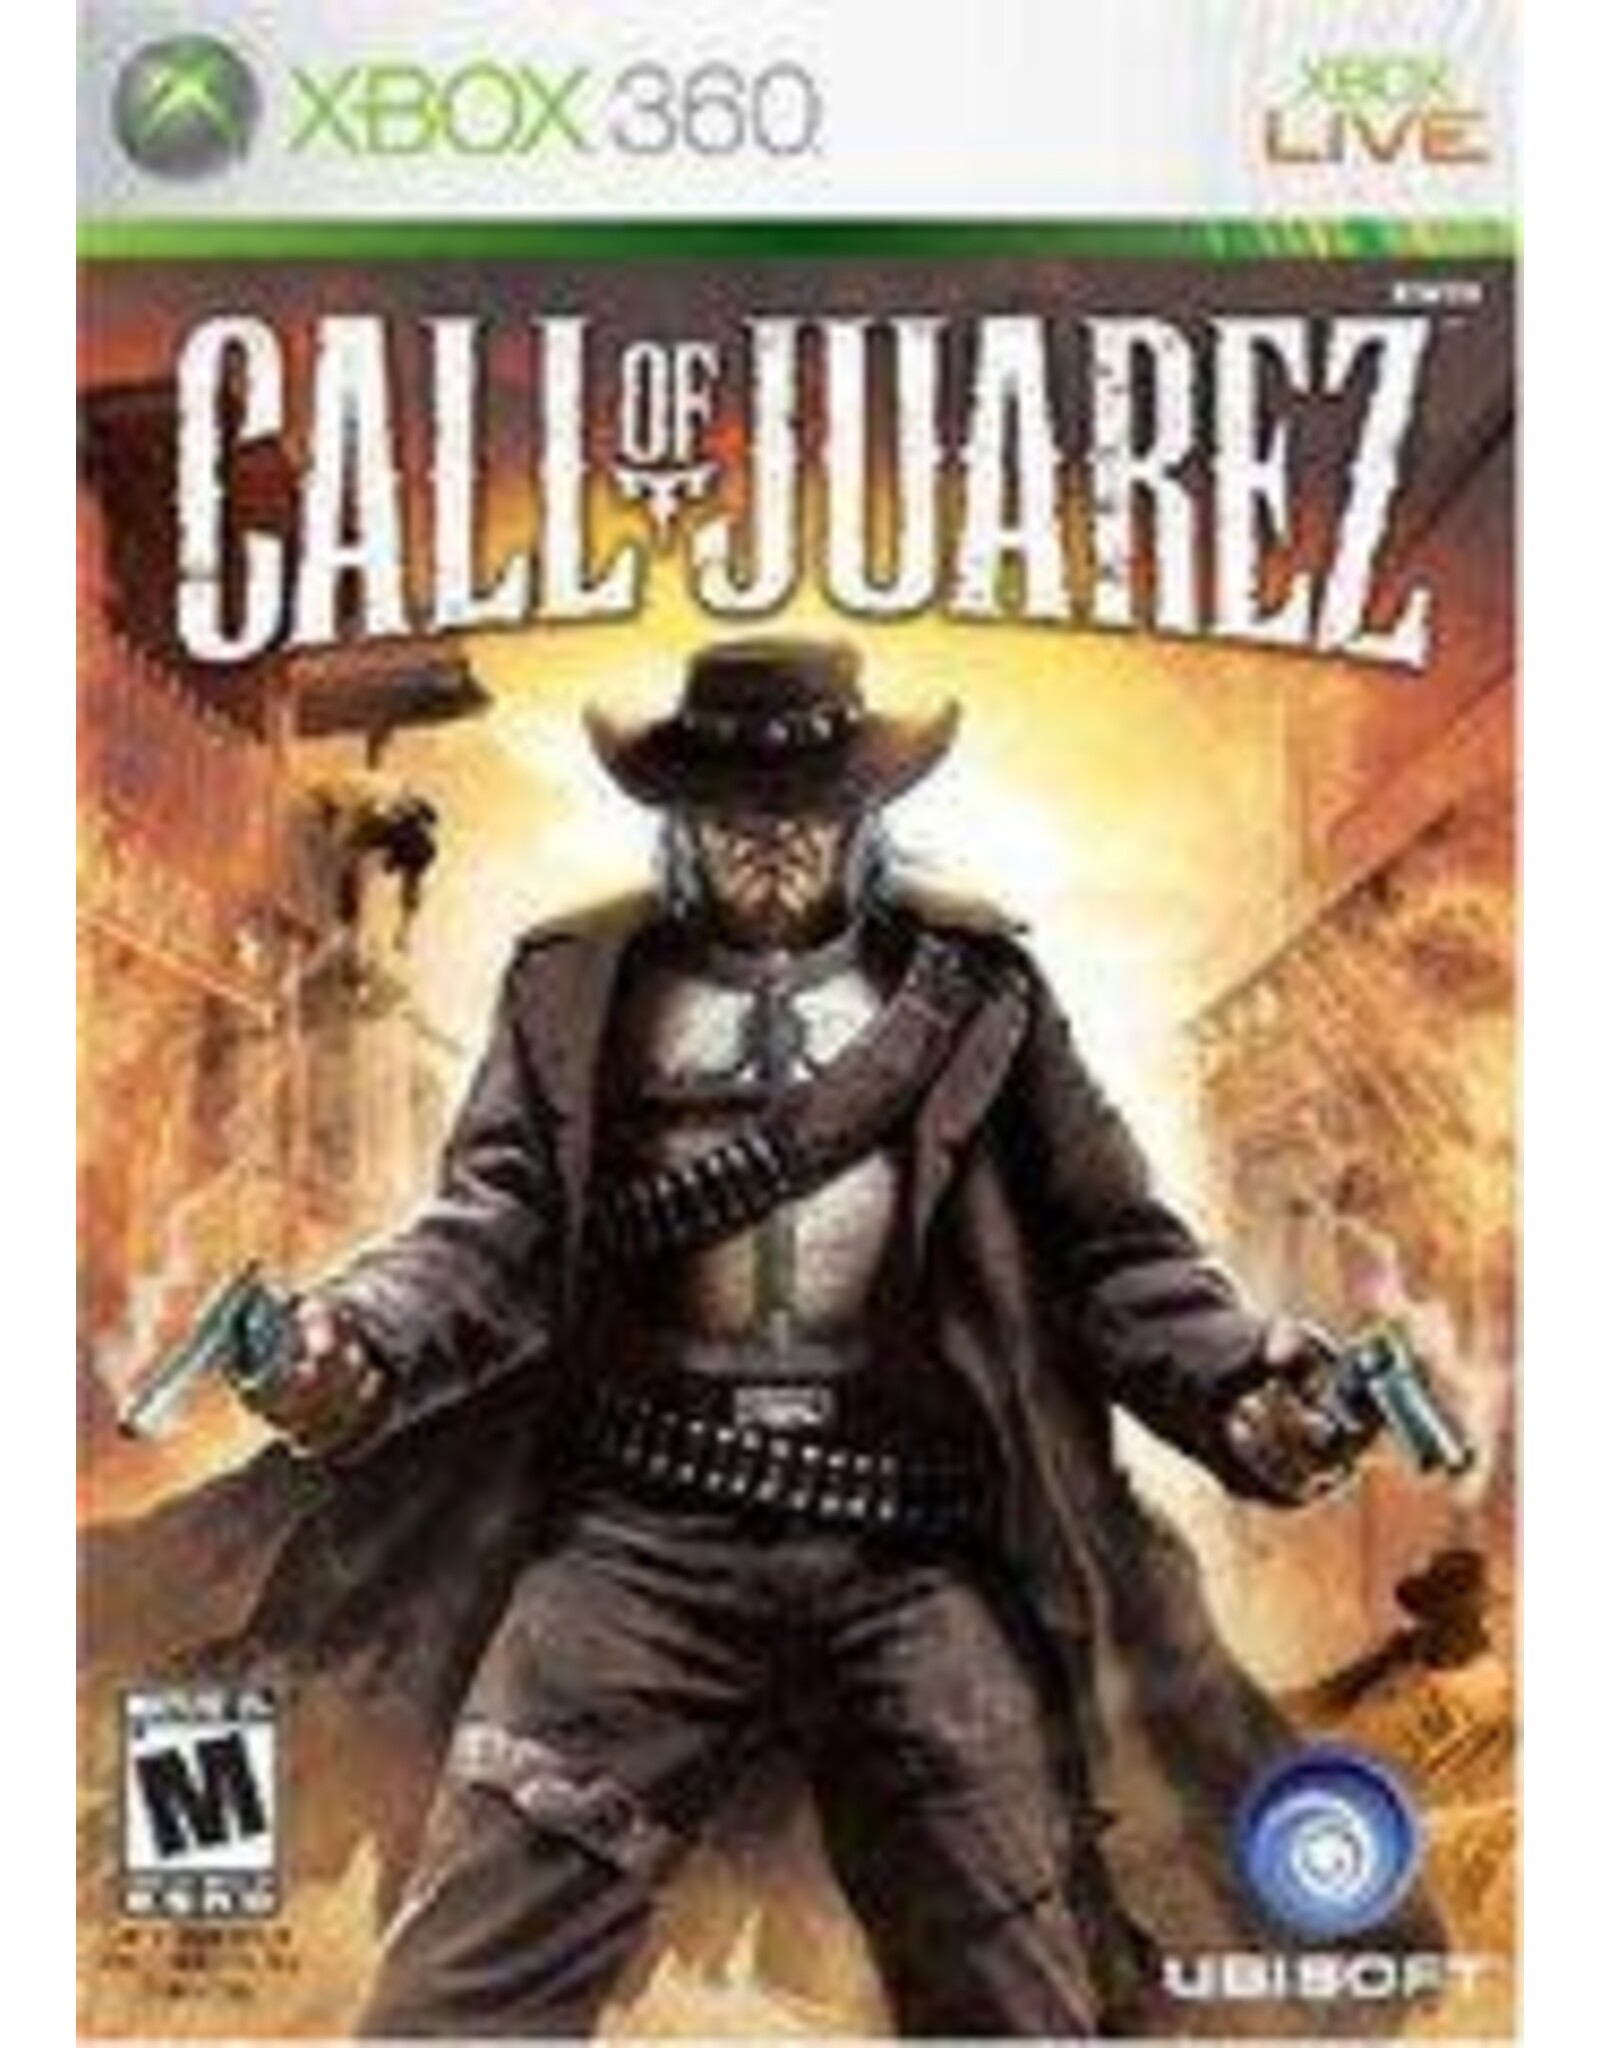 Xbox 360 Call of Juarez (Used)